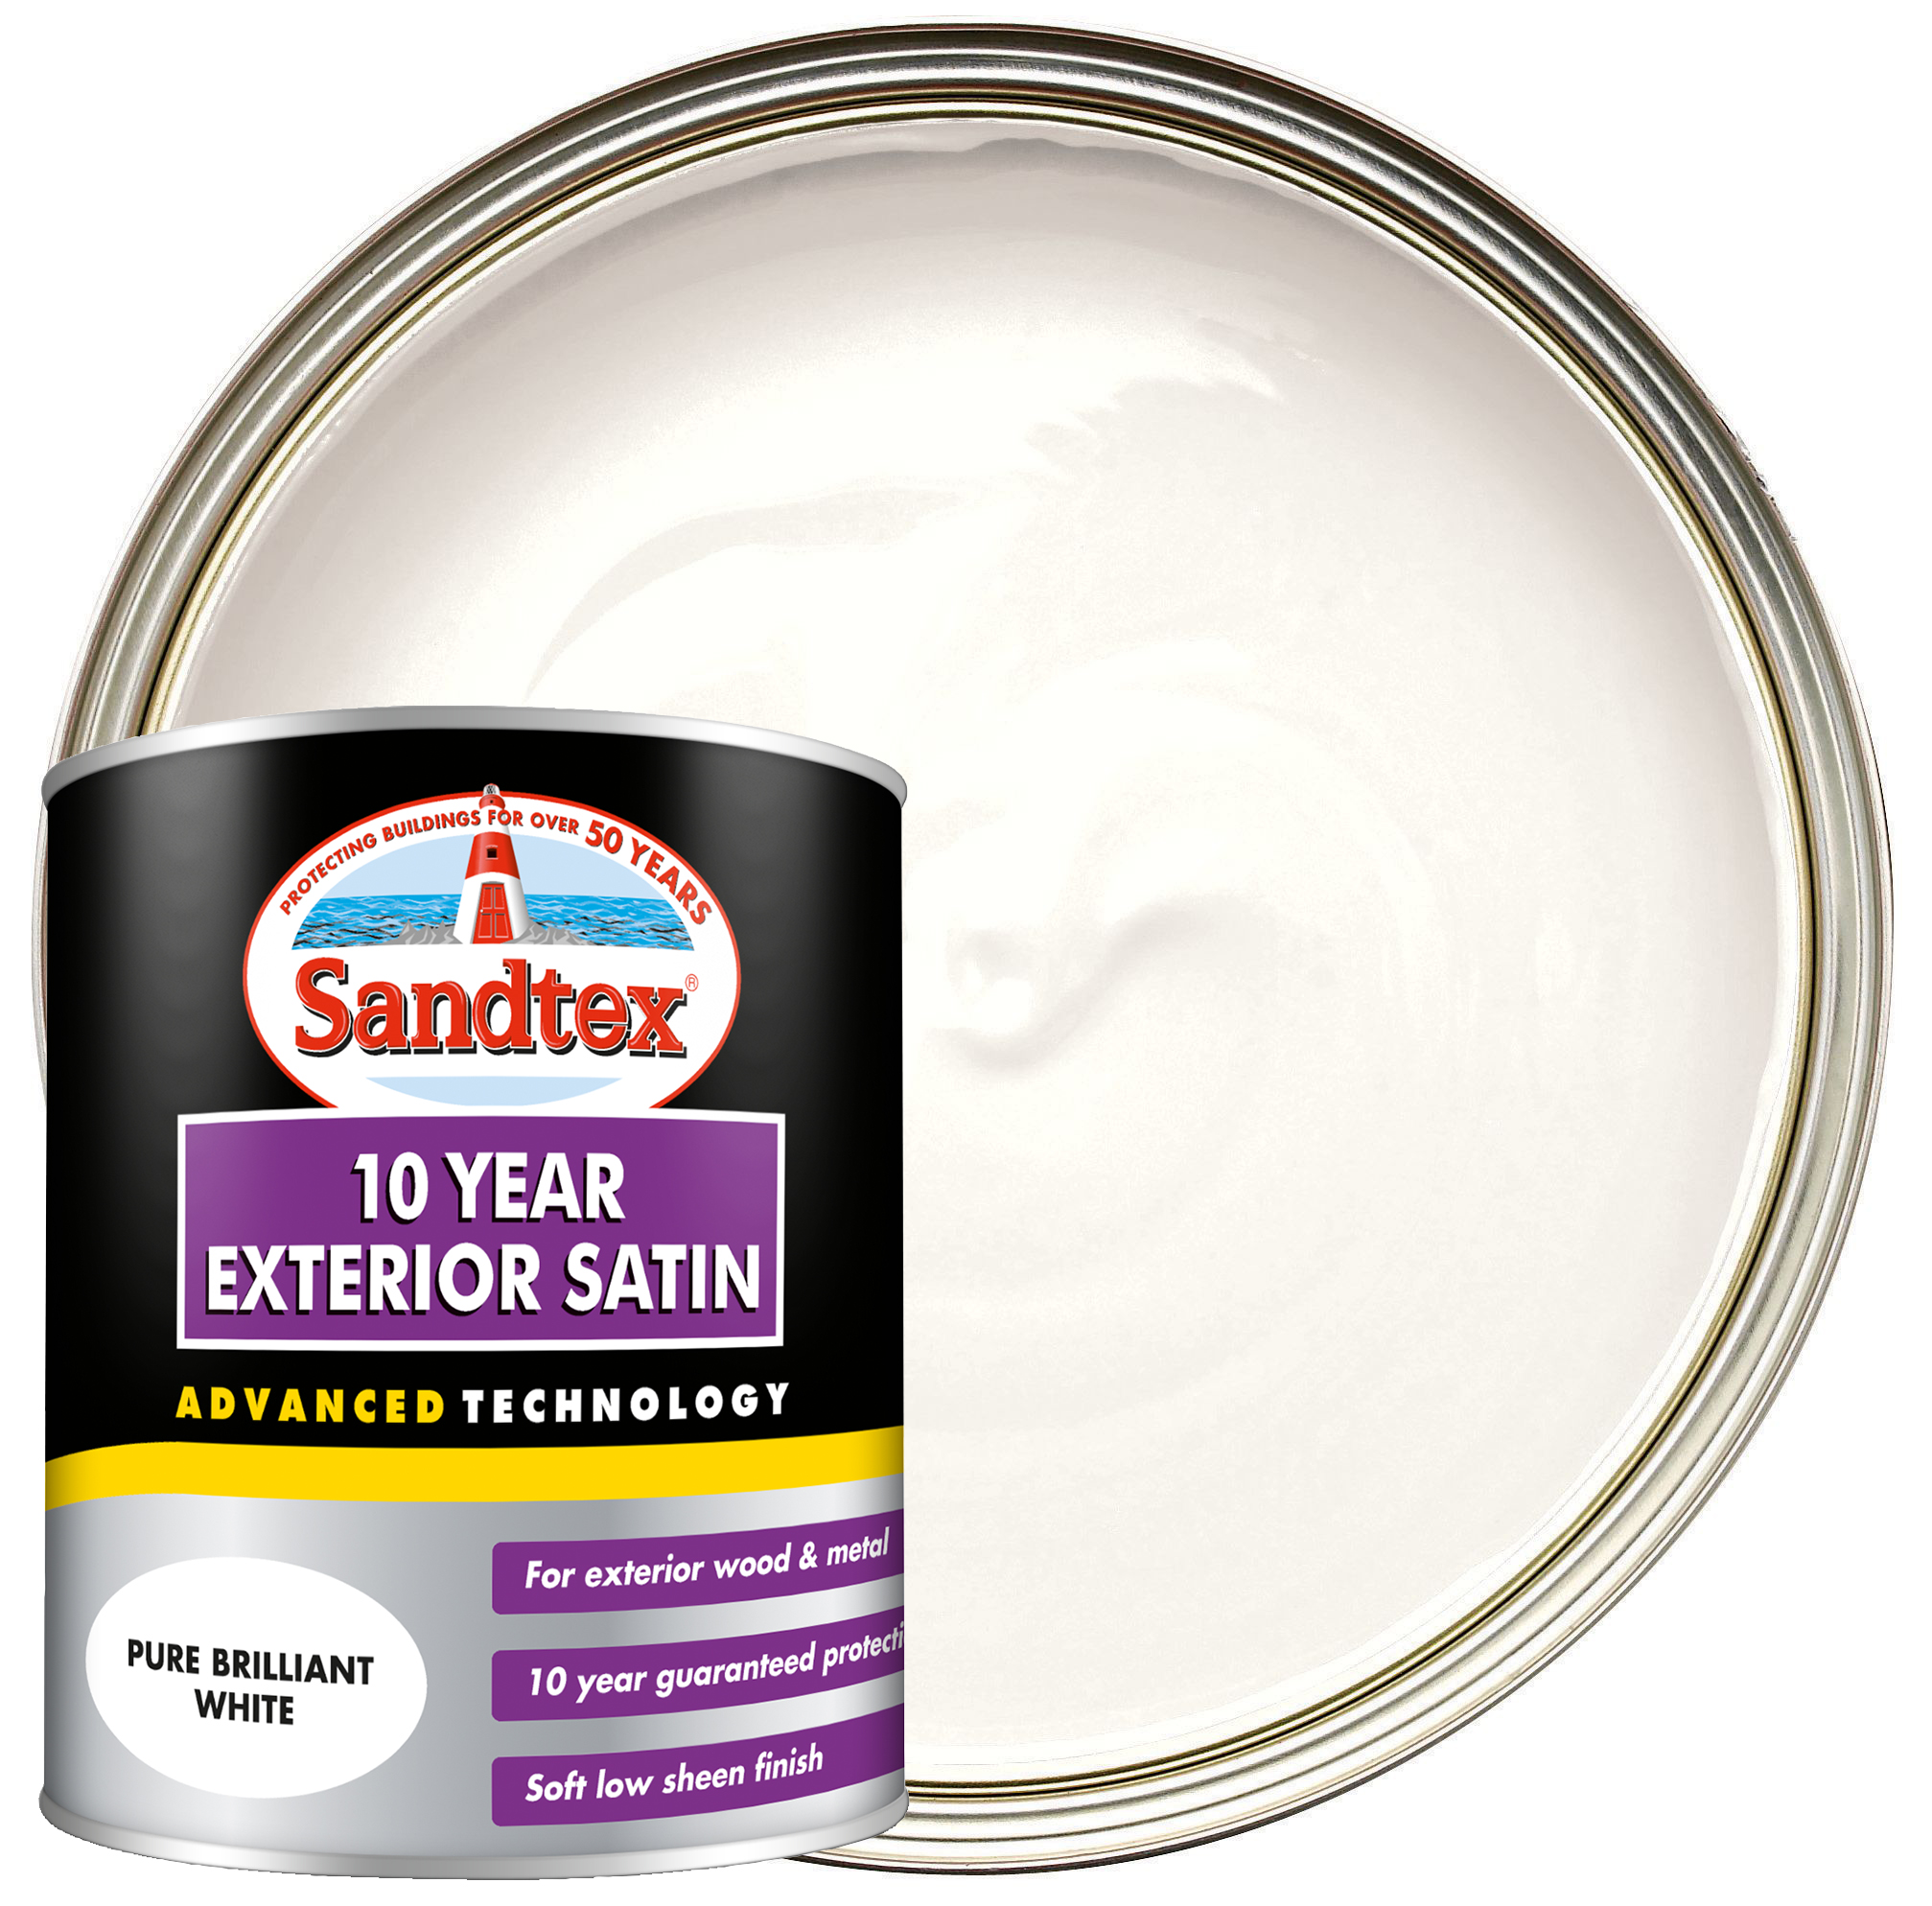 Sandtex 10 Year Exterior Satin Paint - Pure Brilliant White - 750ml